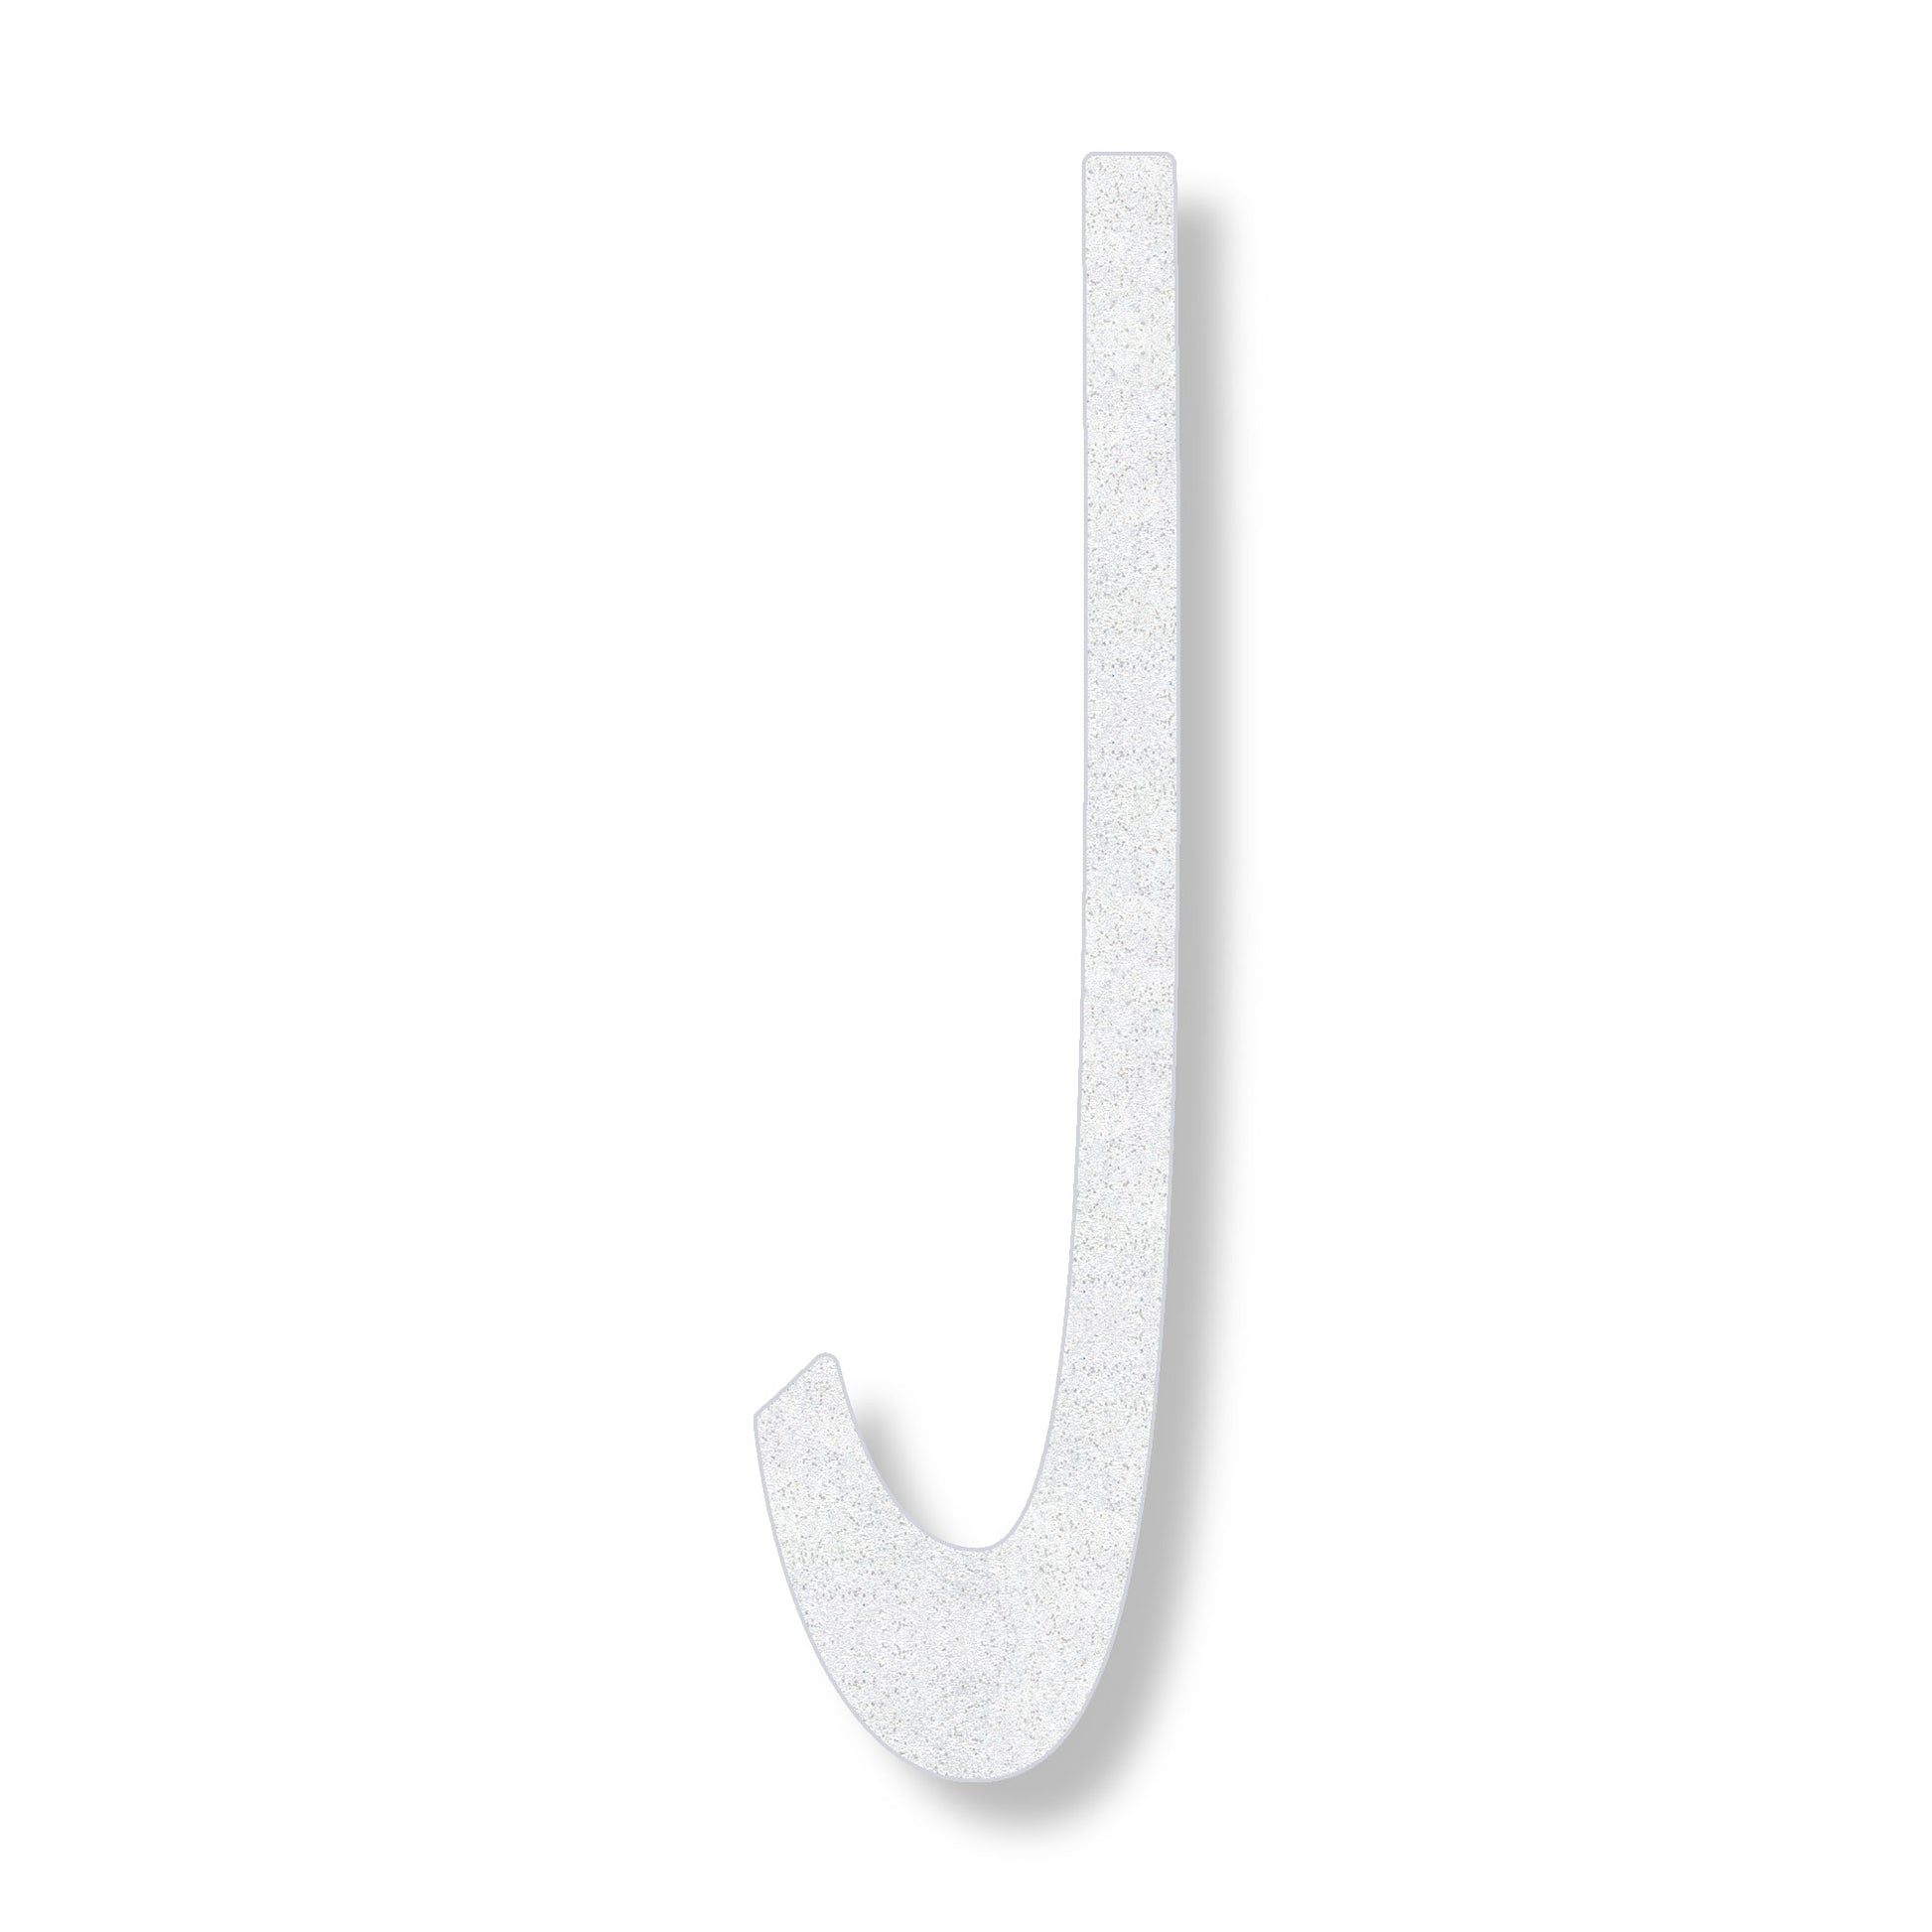 Letter J in white